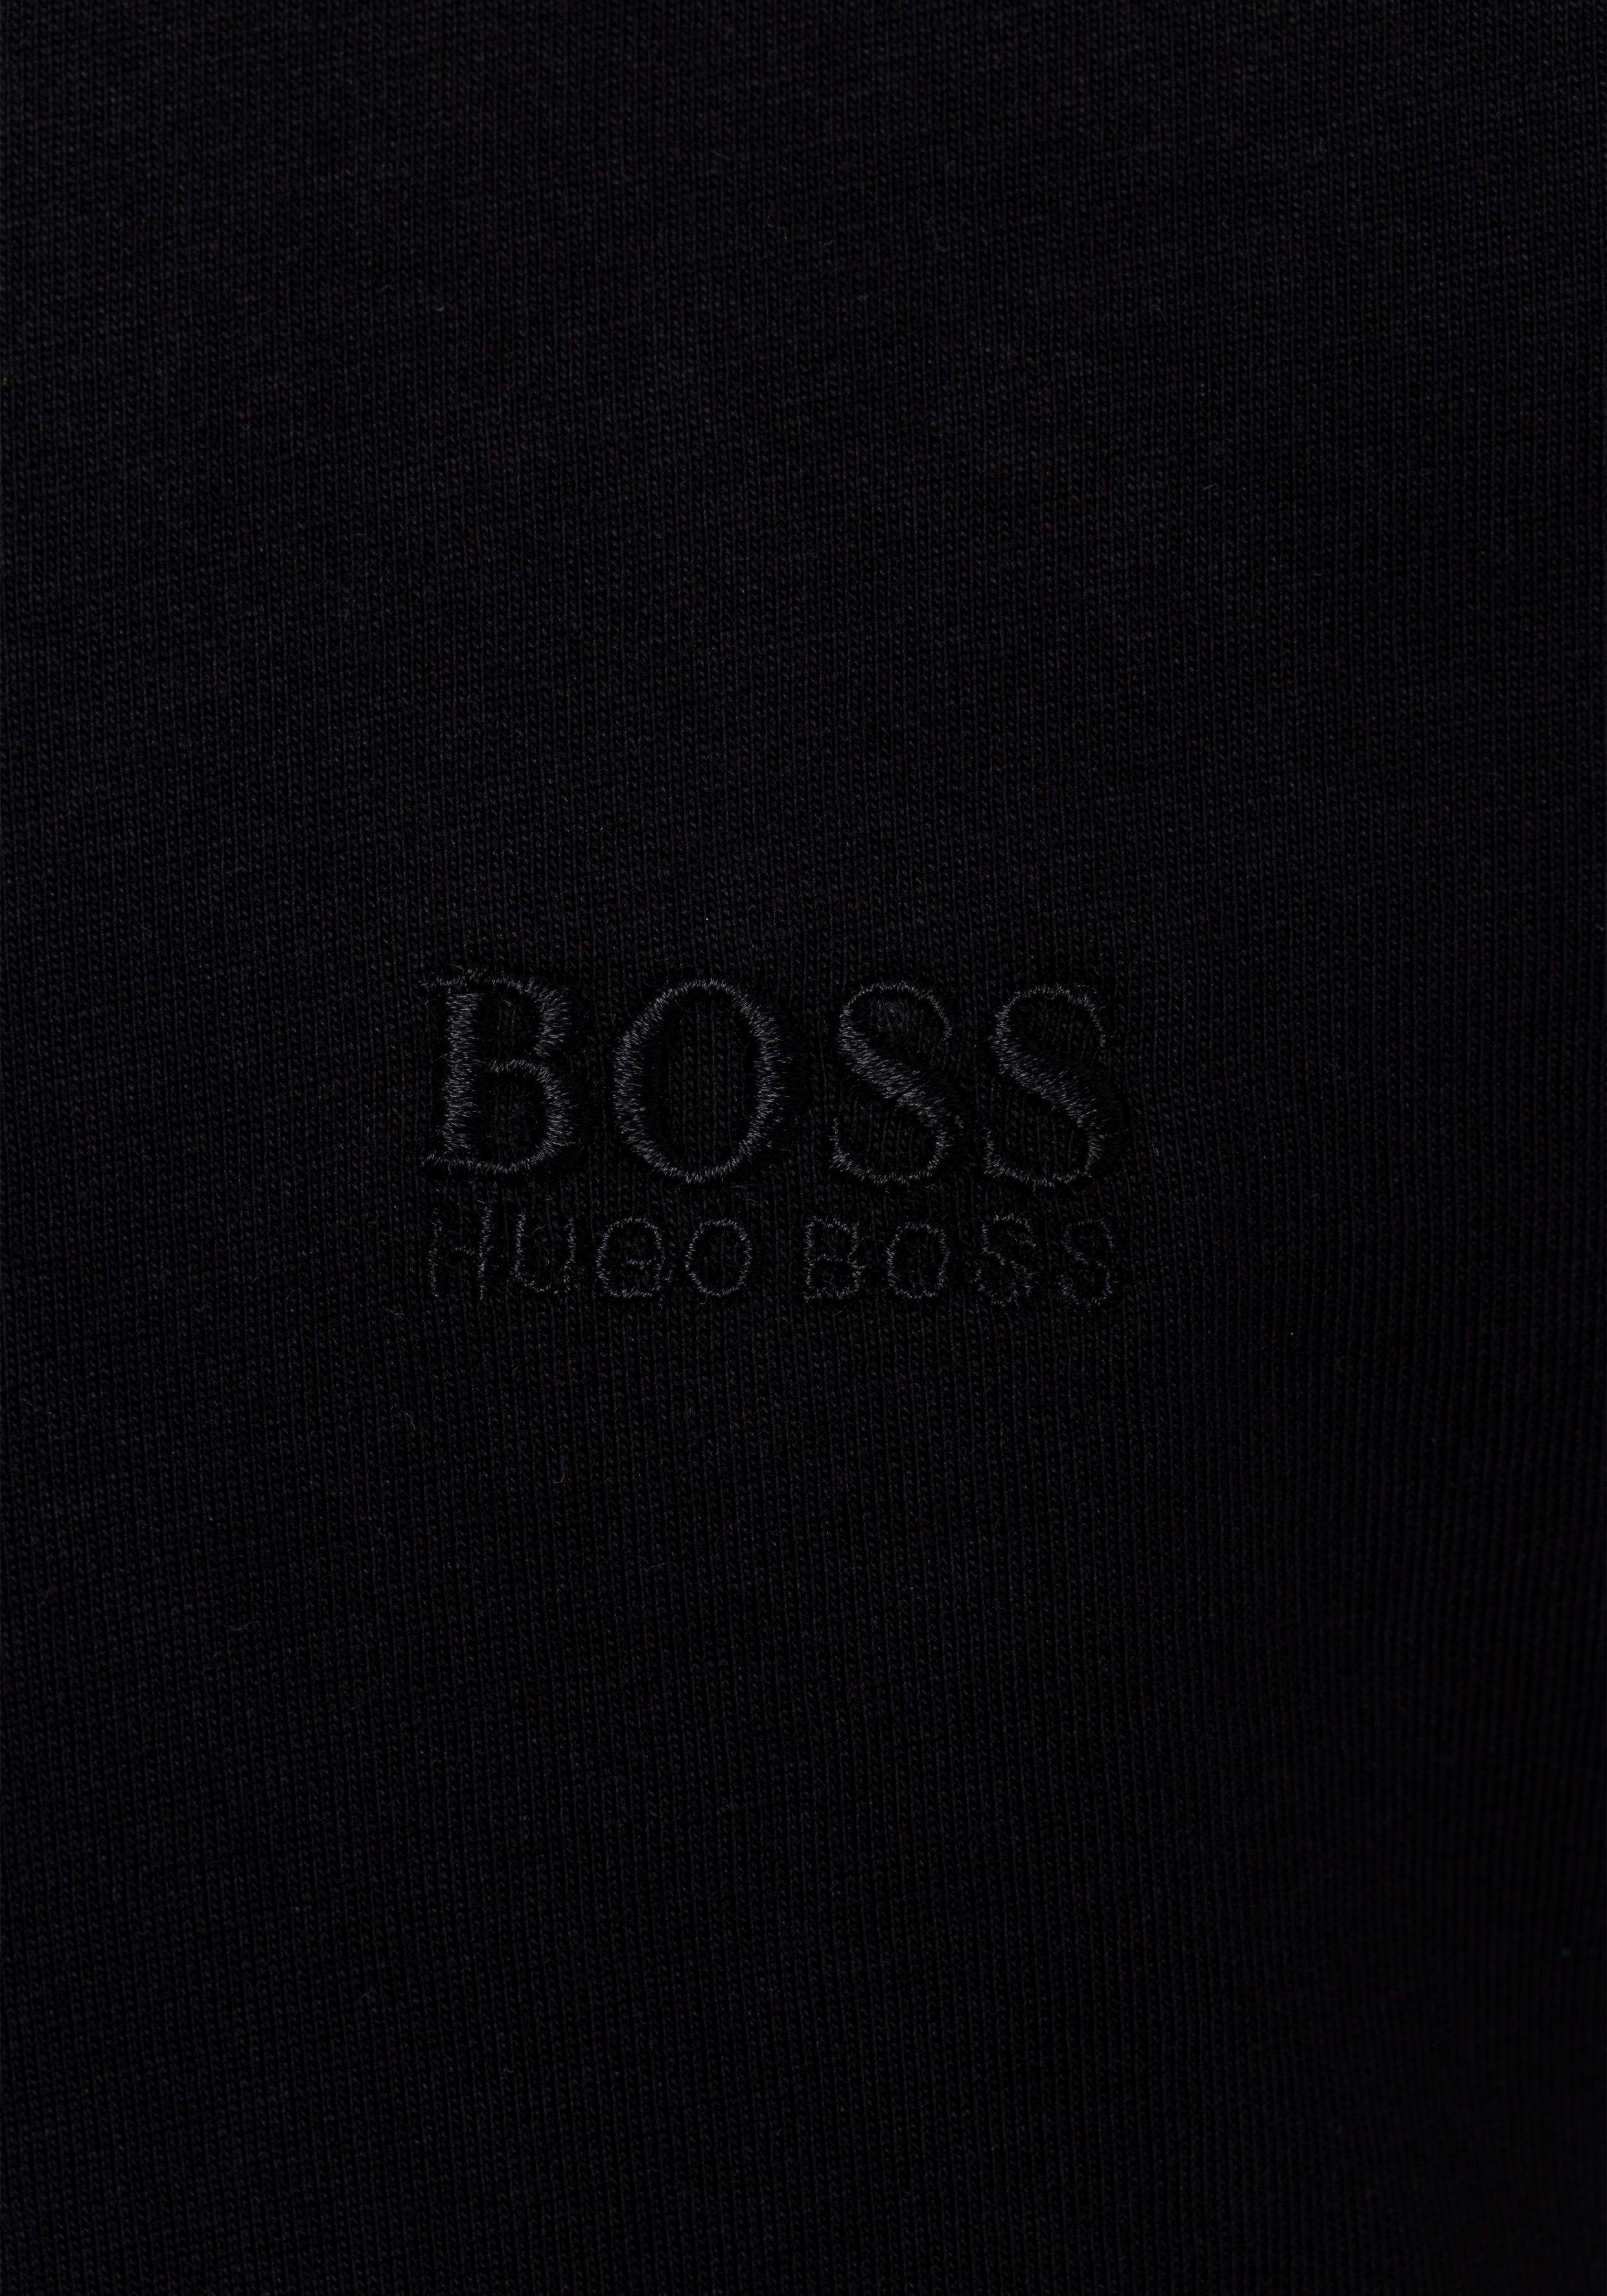 BOSS CO black T-Shirt (Packung) V-Shirt 3P VN